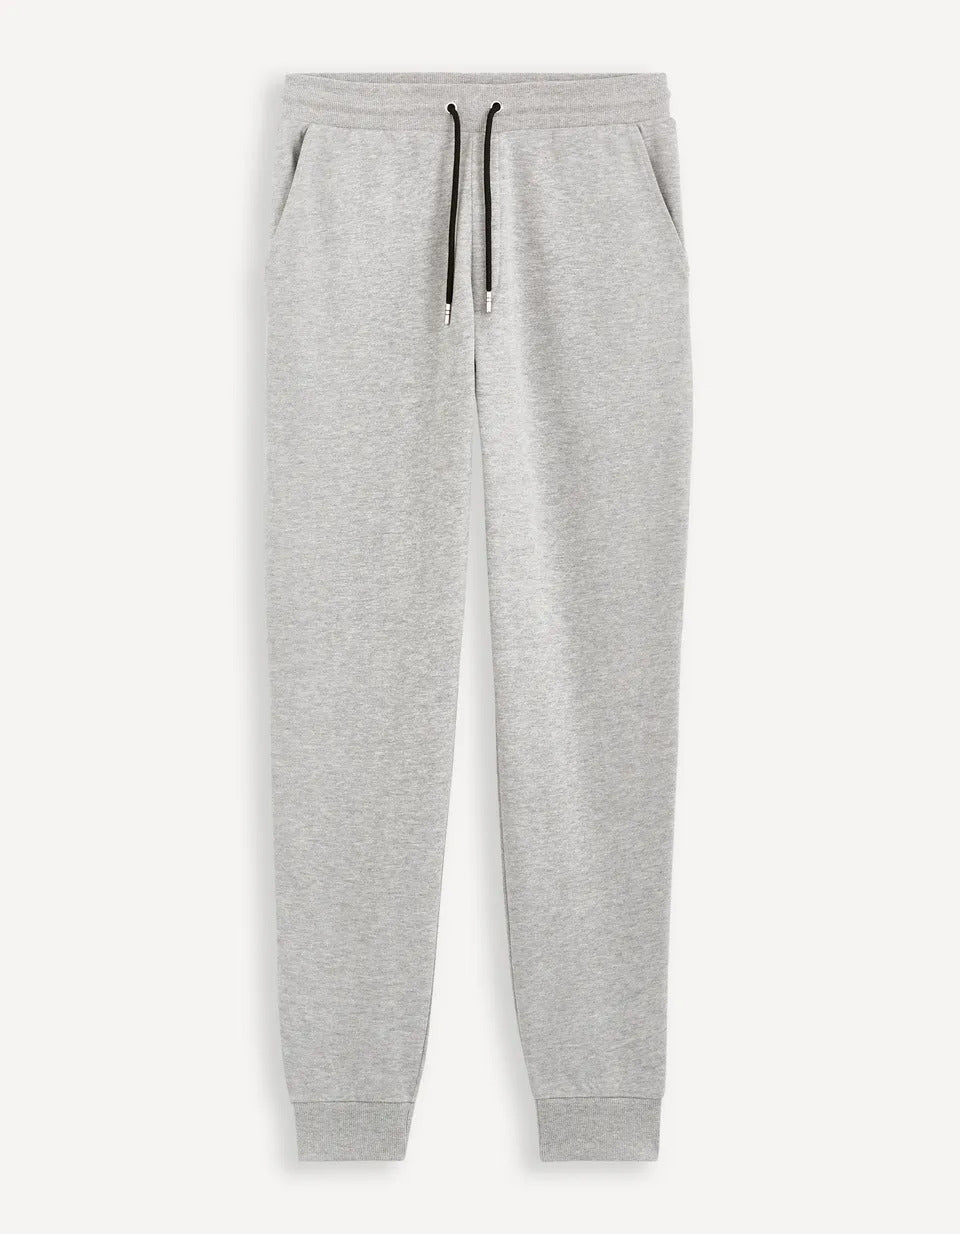 Jogging Pants 100% Cotton - Gray - 04